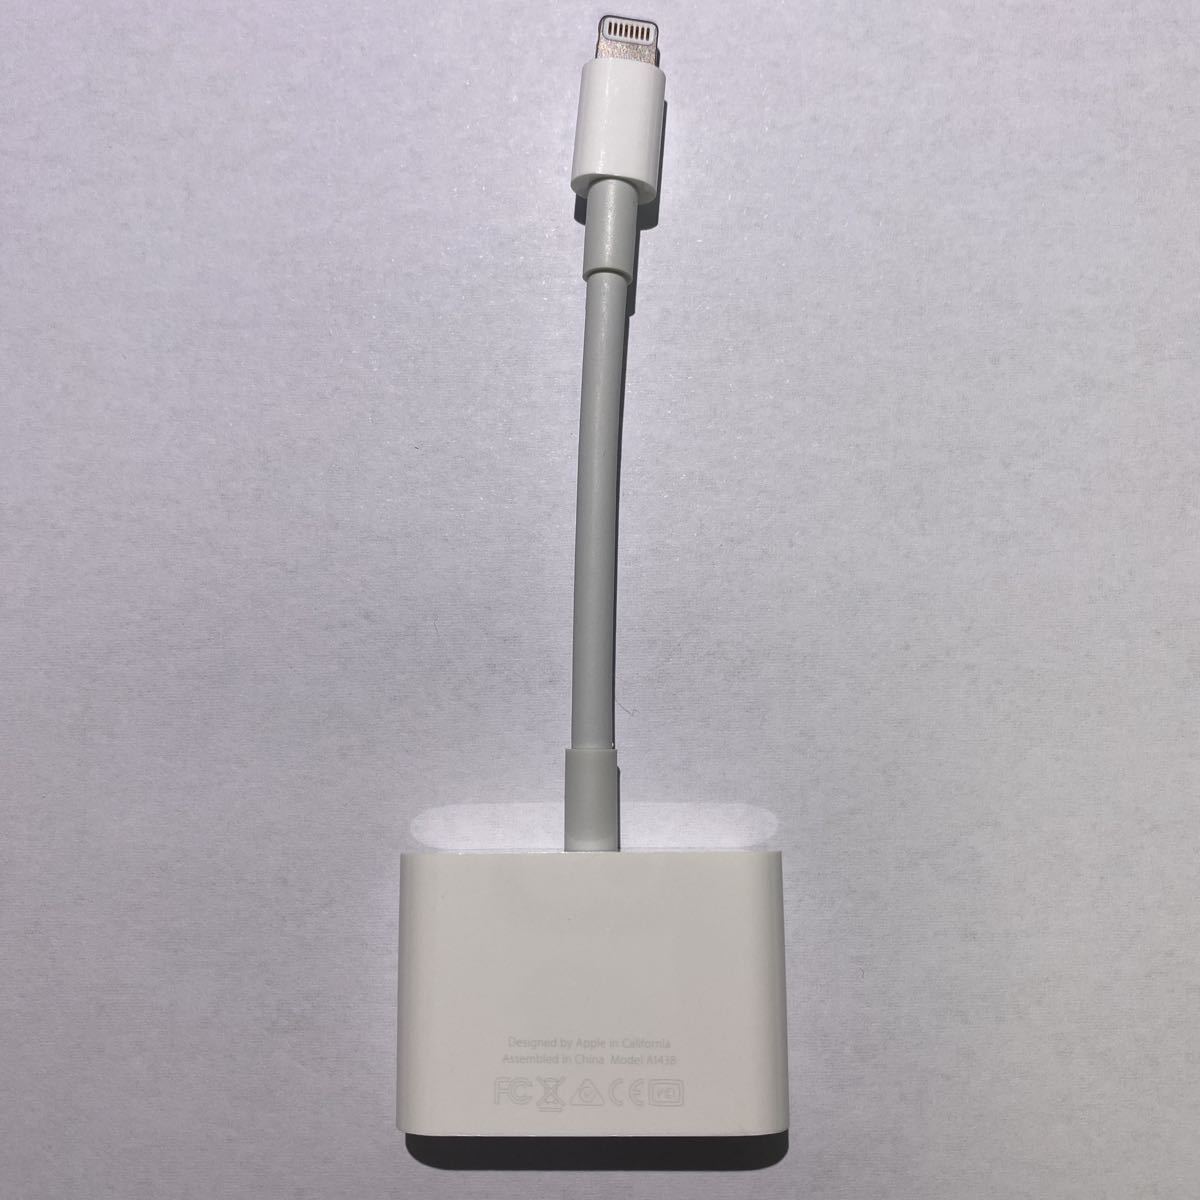 Apple純正 Lightning to Digital AV Adapter iPhone iPad HDMI変換 HDMI出力 正規品  MD826AM/A A1438(HDMIケーブル)｜売買されたオークション情報、yahooの商品情報をアーカイブ公開 -  オークファン（aucfan.com）